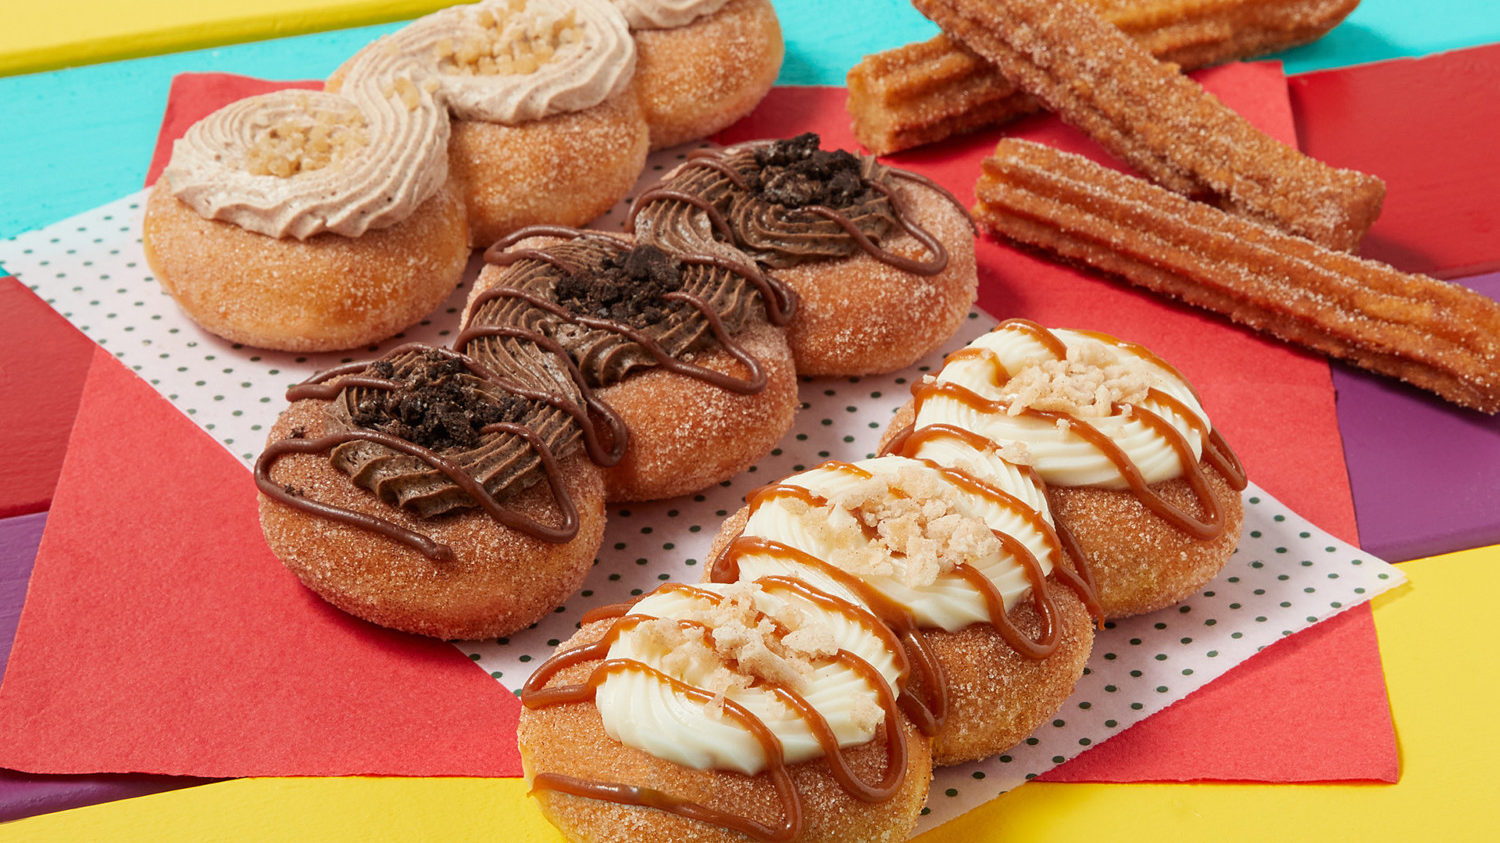 Krispy Kreme ChurrDough churro donuts